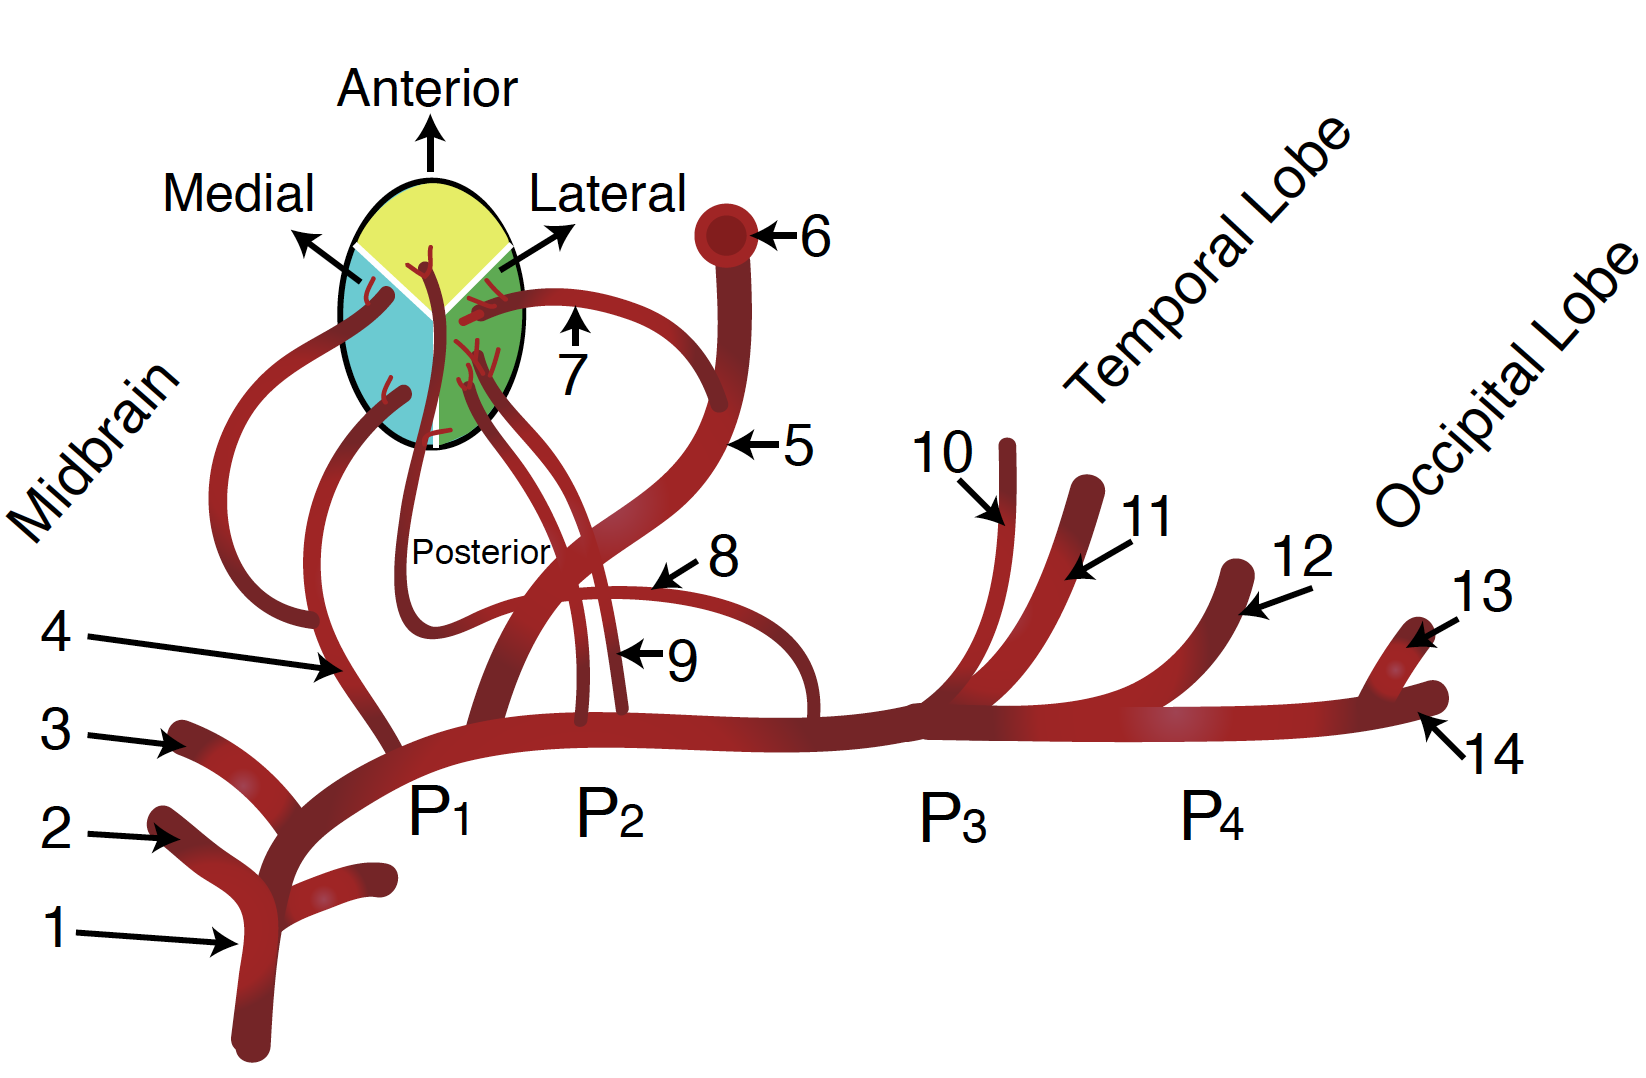 Figure 2 - Schematic diagram of the posterior cerebral artery and its branches: 1, basilar artery (BA); 2, superior cerebellar artery (SCA); 3, posterior cerebral artery (PCA); 4, thalamosubthalamic arteries; 5, posterior communicating artery; 6, internal carotid artery; 7, polar artery of thalamus; 8, posterior choroidal artery; 9, thalamogeniculate artery; 10, anterior inferior temporal artery; 11, posterior inferior temporal artery; 12, occipitotemporal artery; 13, calcarine arteries; 14, occipitoparietal artery